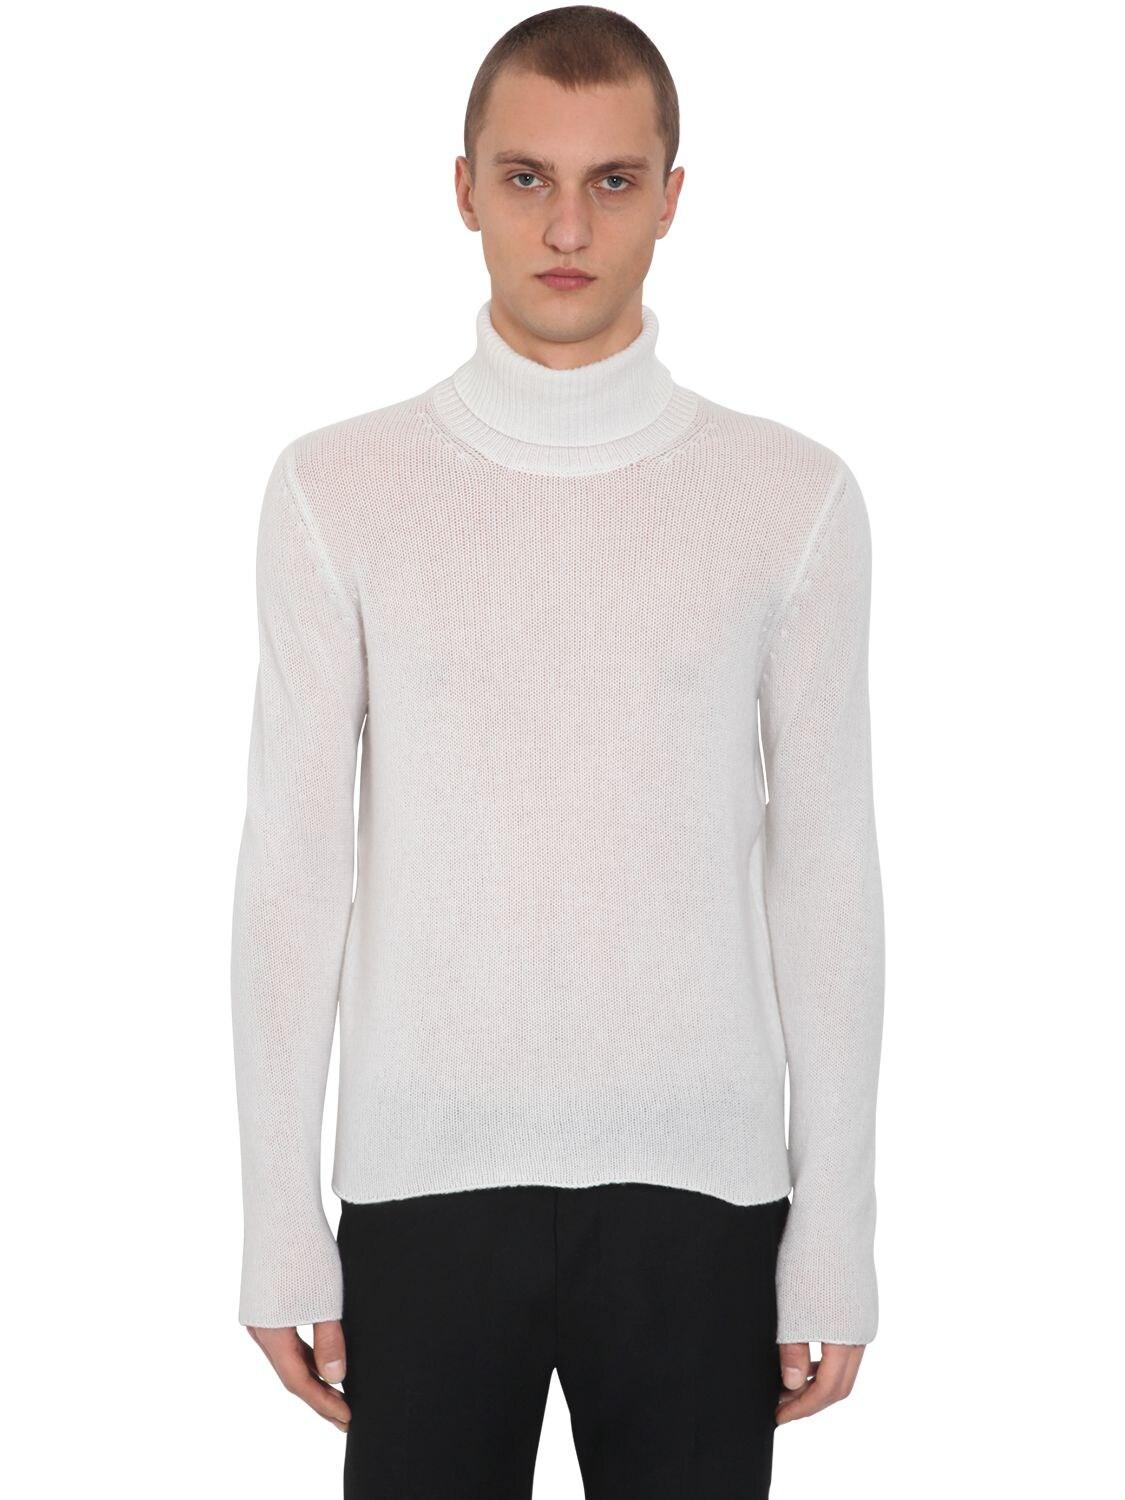 Bottega Veneta Cashmere Knit Turtle Neck Sweater in White for Men - Lyst